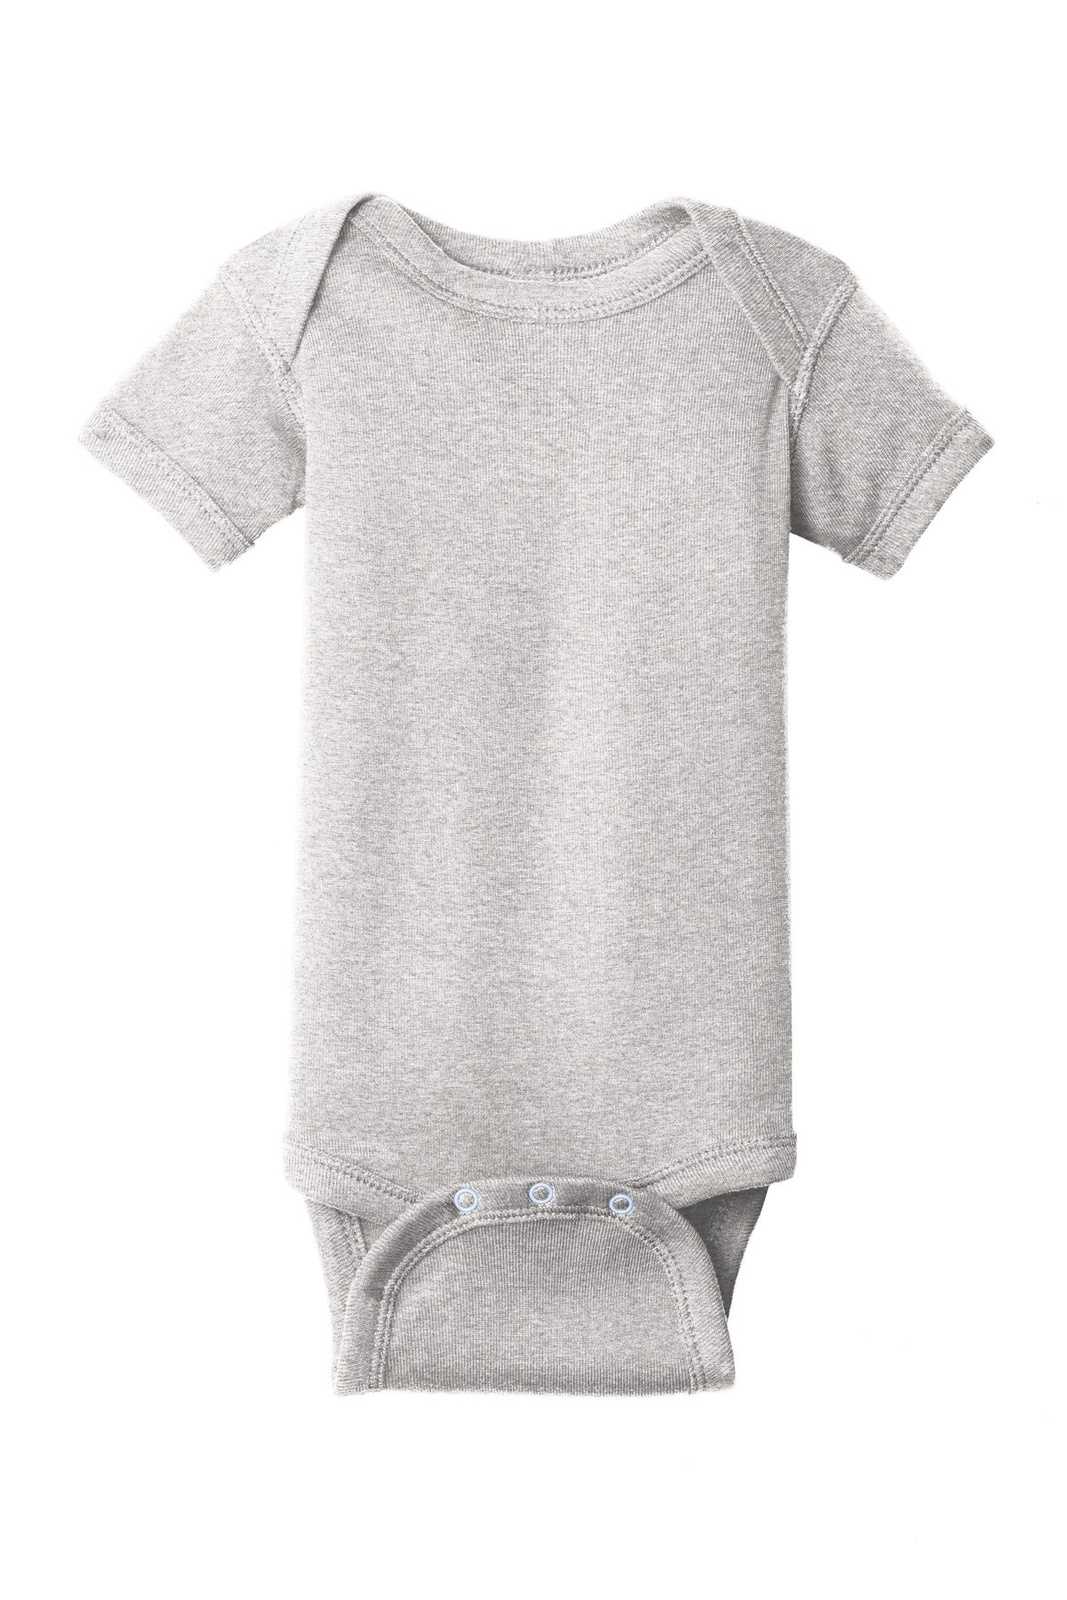 Rabbit Skins 4400 Infant Short Sleeve Baby Rib Bodysuit - Heather - HIT a Double